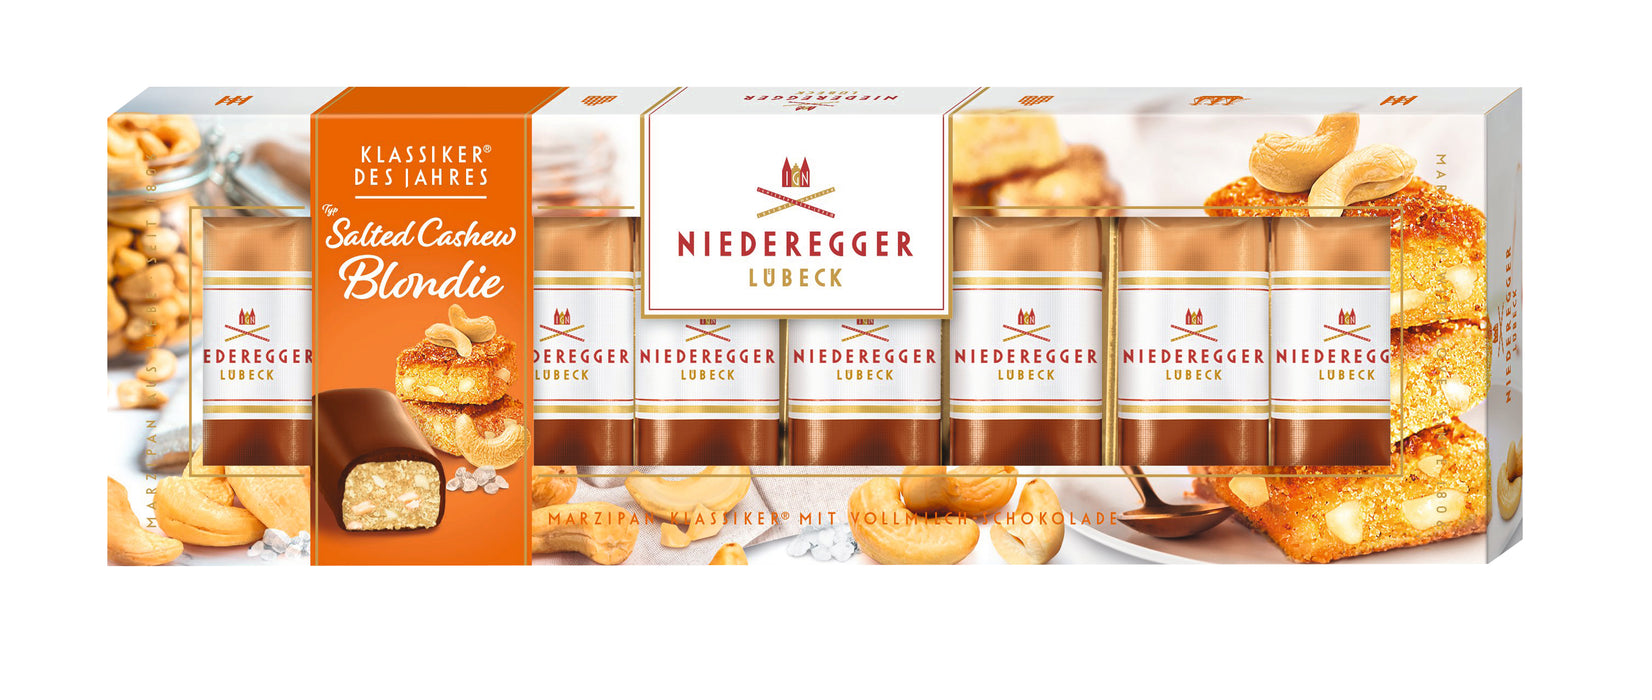 Niederegger Classic Of The Year Milk Salted Cashew Blondie In Gift Box 100g